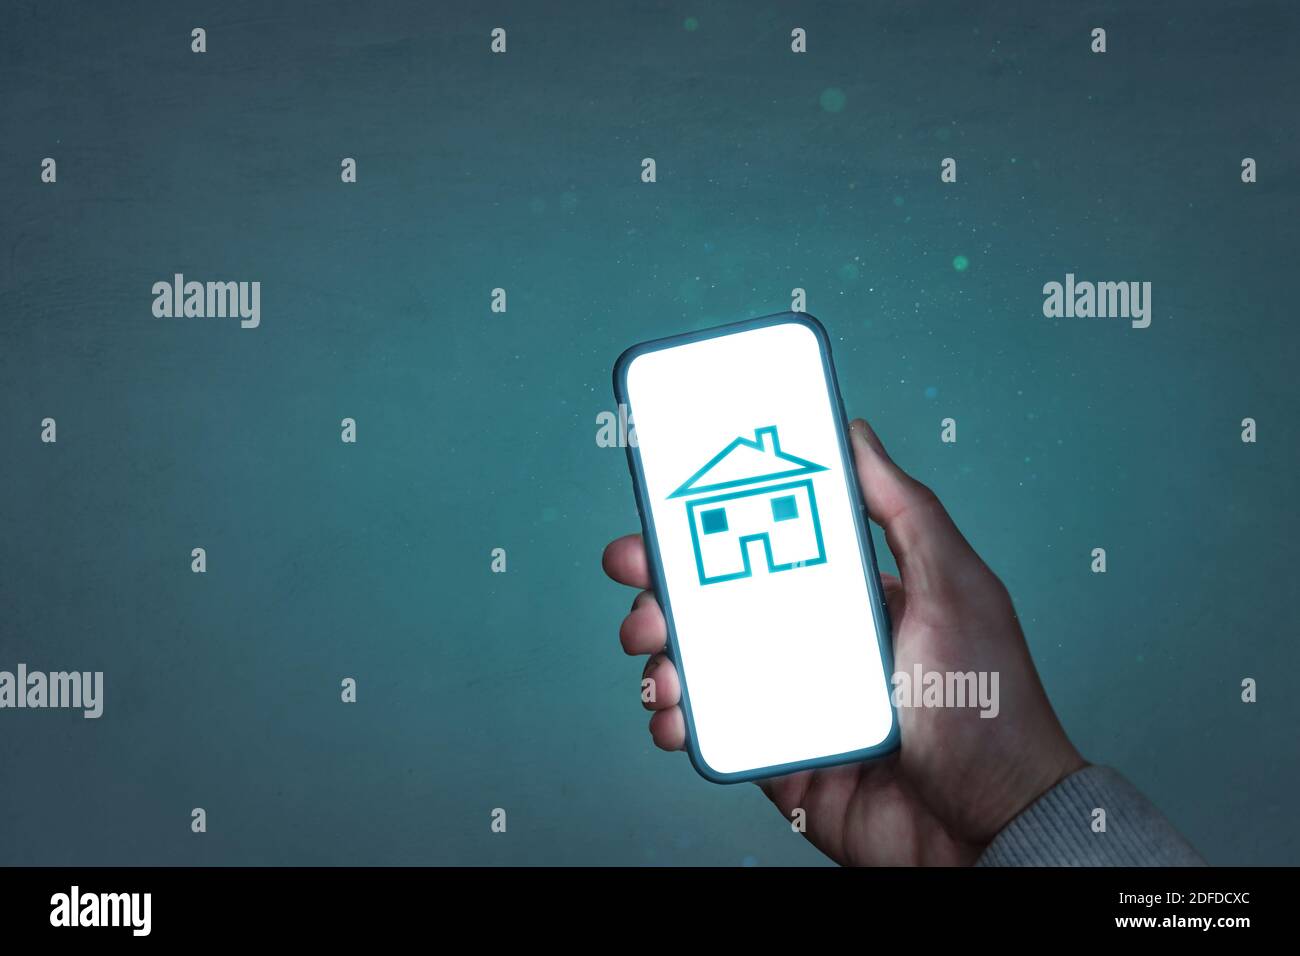 La pantalla del smartphone muestra un símbolo de casa Foto de stock